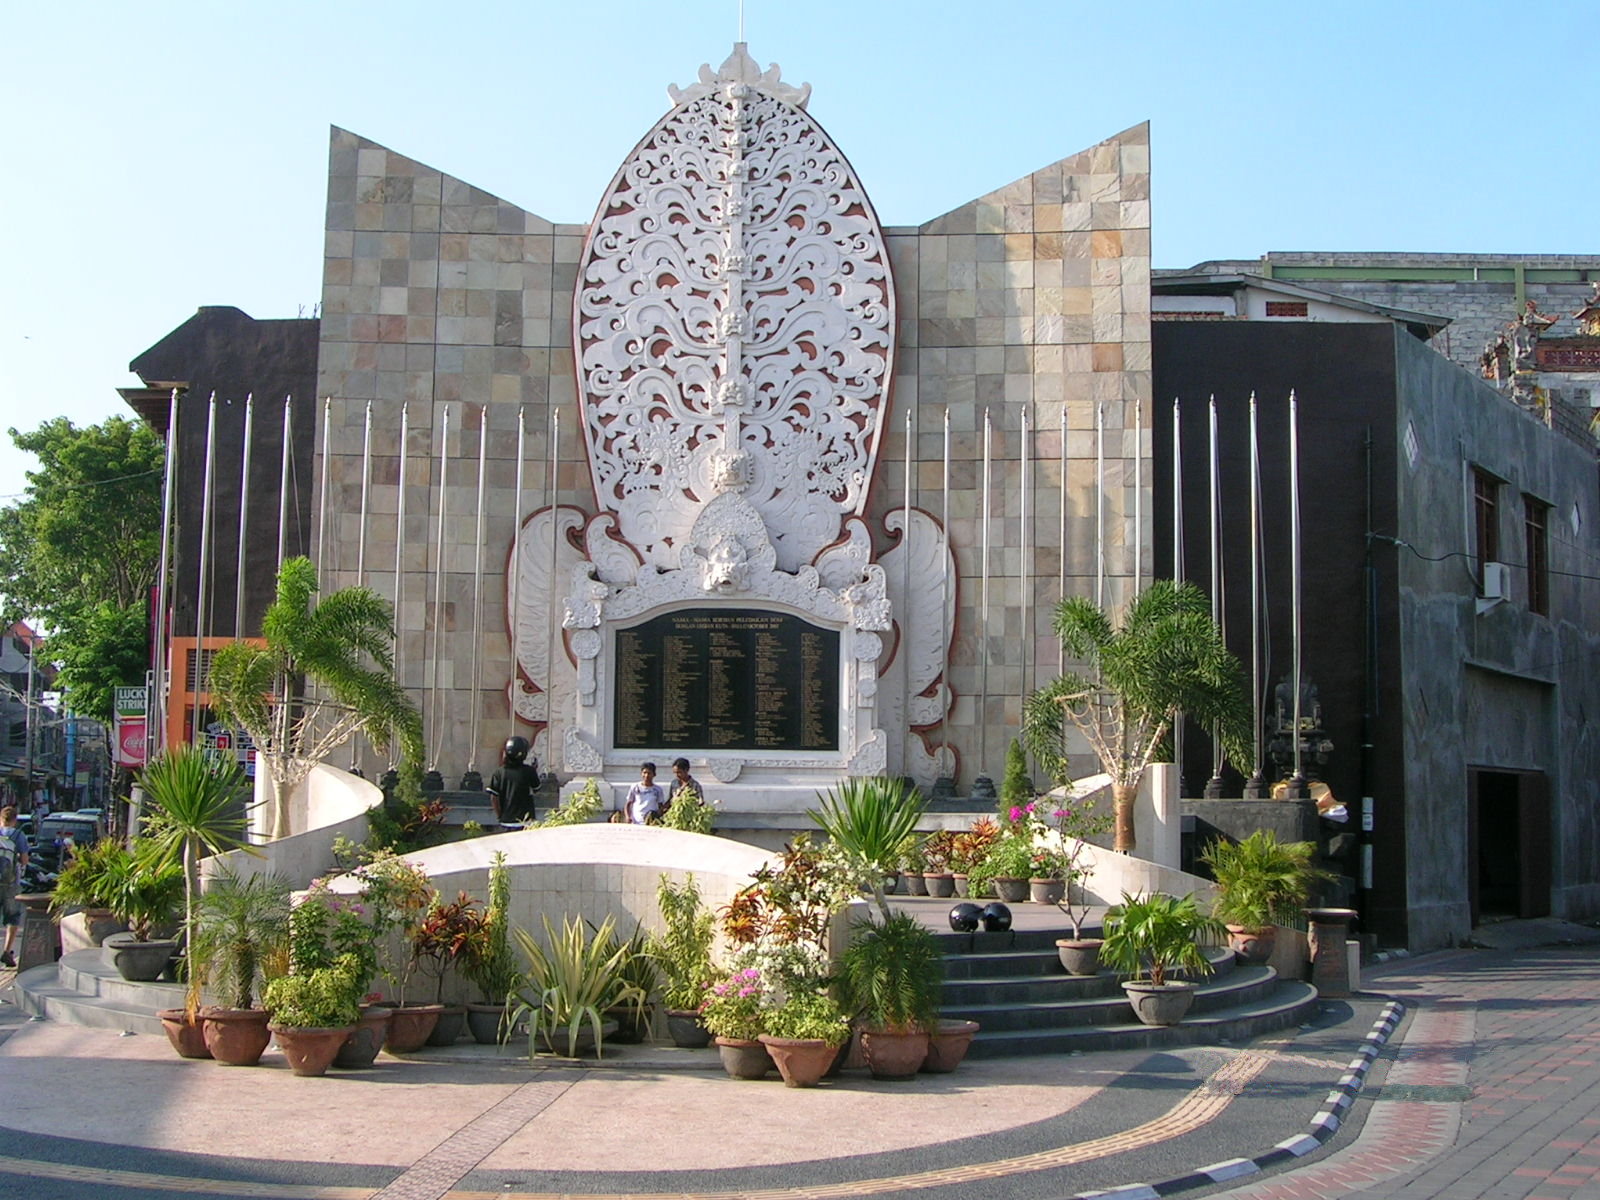 Monumen Ground Zero Bali [Image Source]